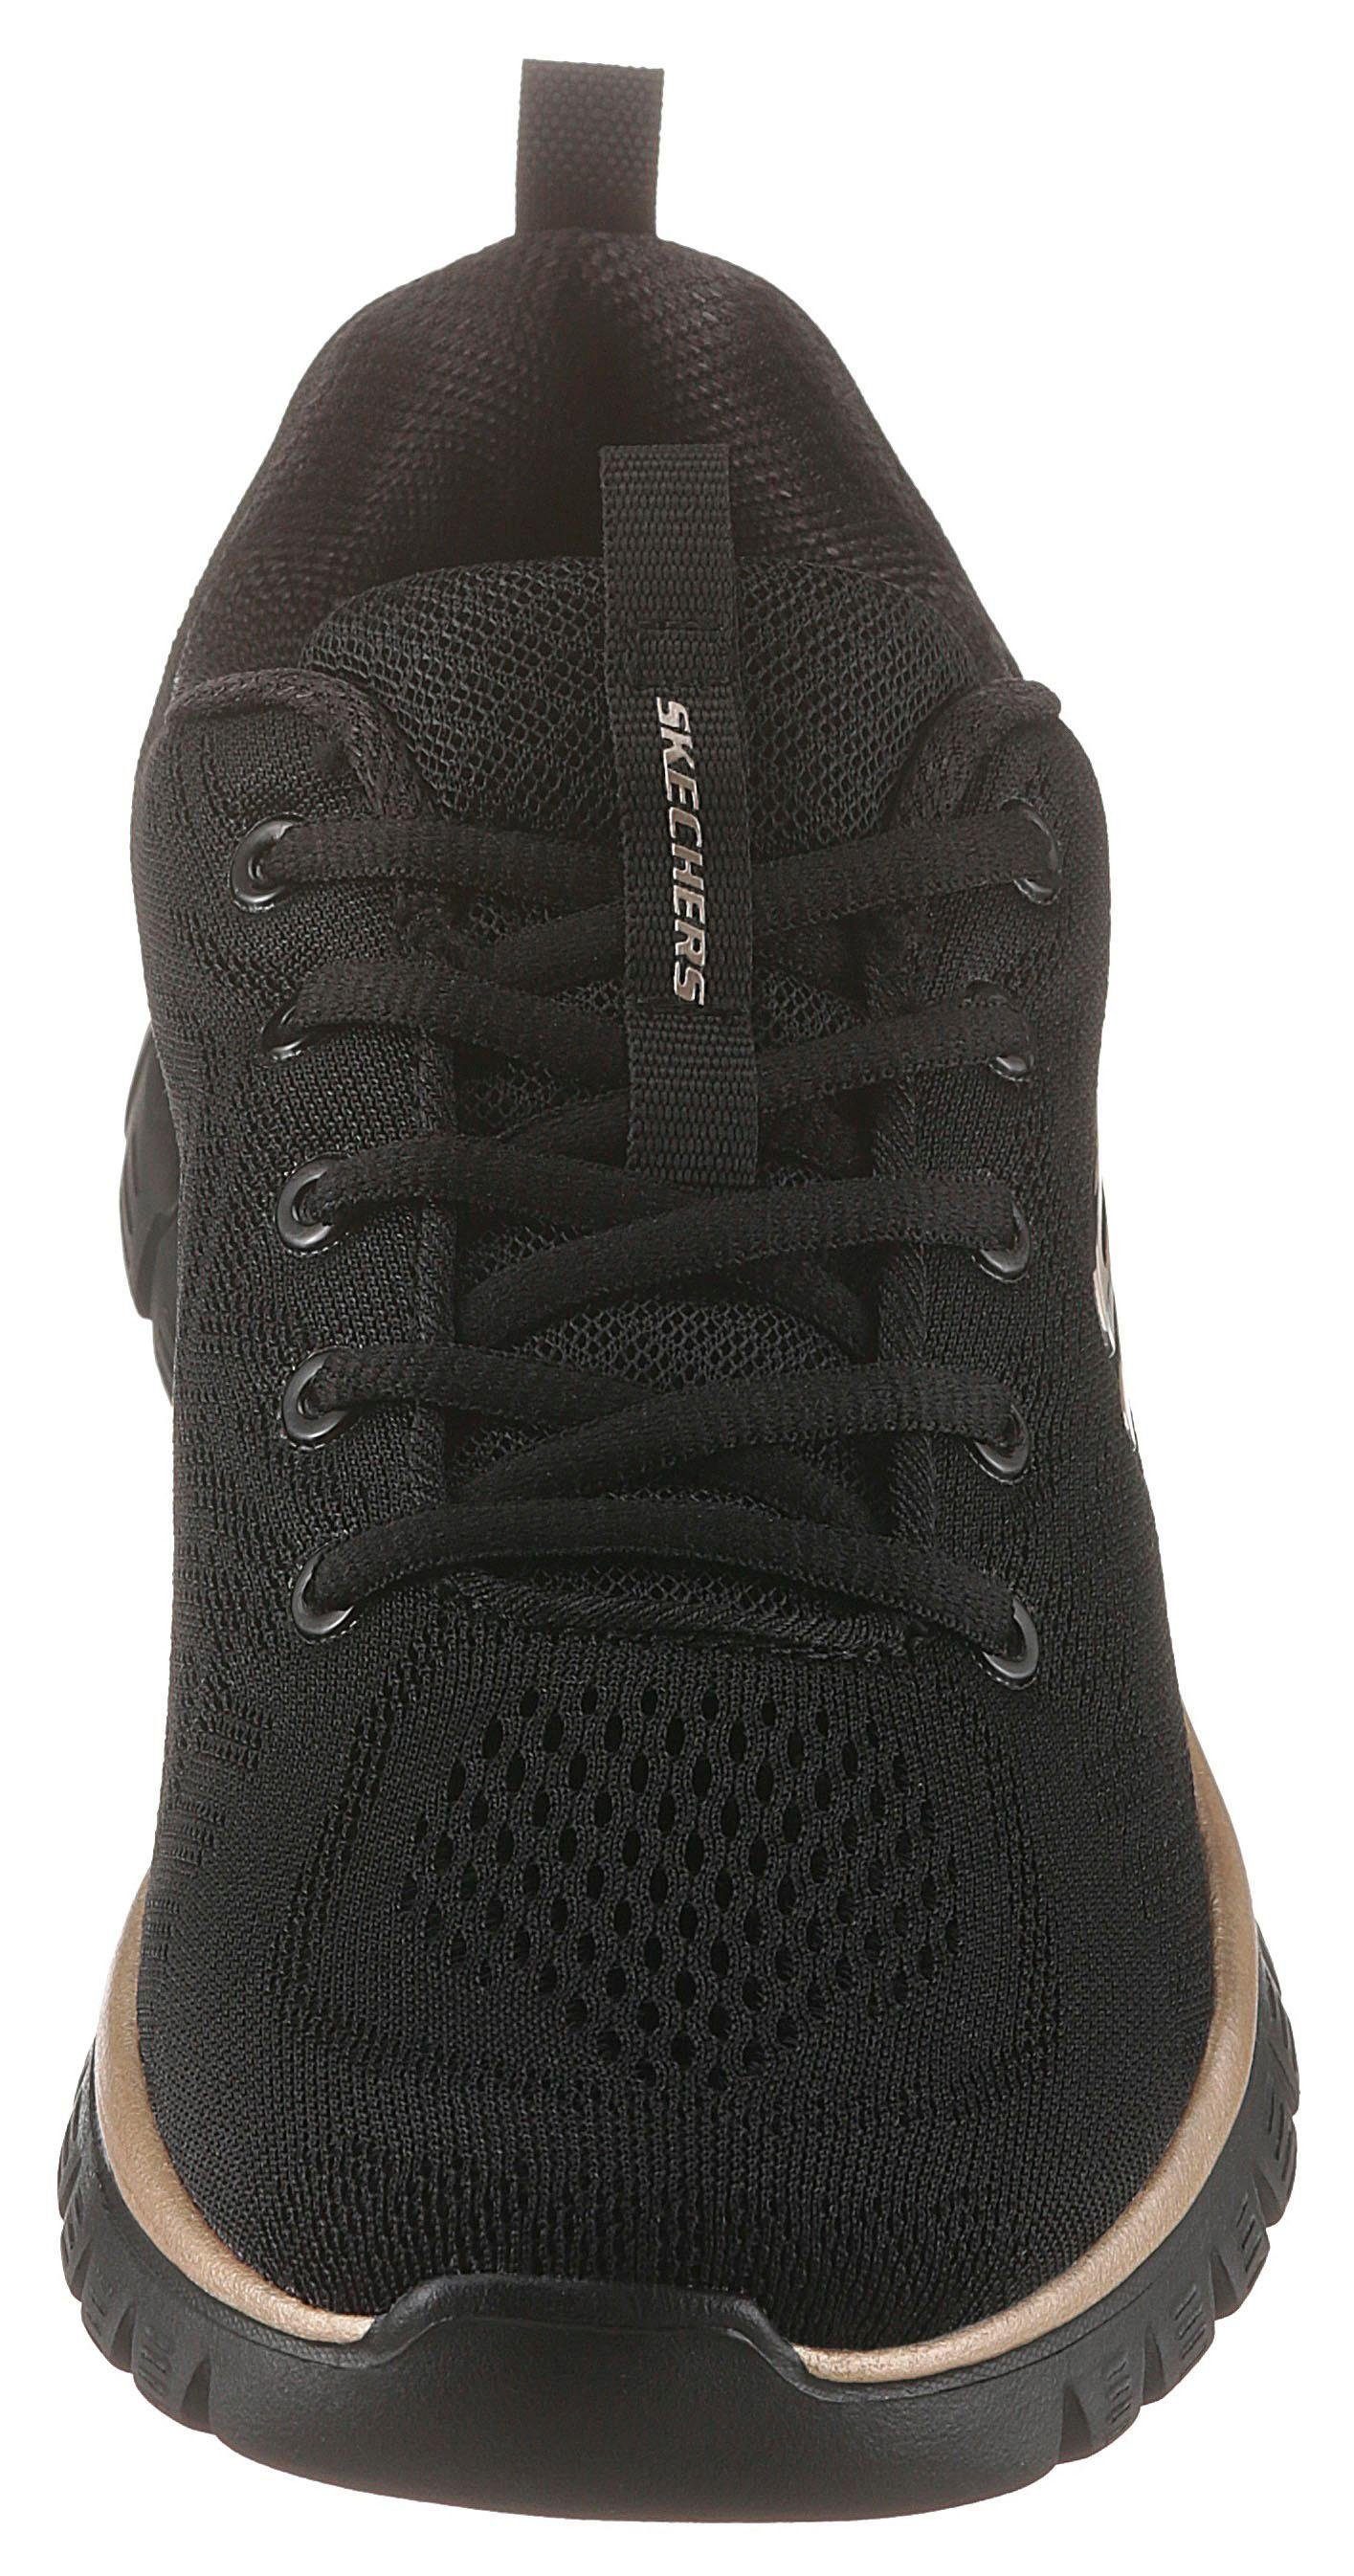 mit schwarz-goldfarben Foam Graceful Memory Connected Get Skechers Sneaker durch - Dämpfung